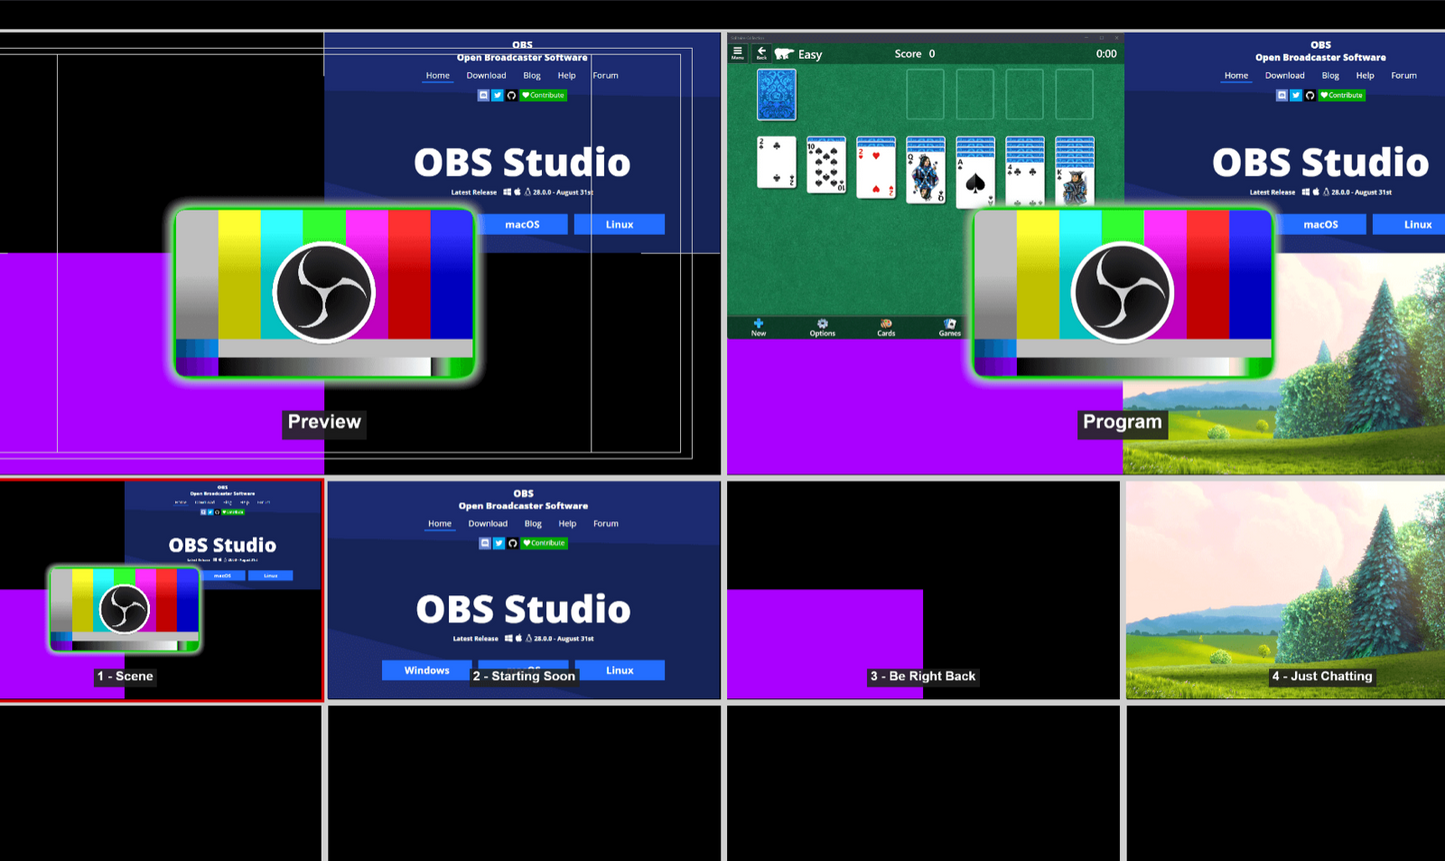 OBS Studio Video Recording | Live Streaming | Screen Recording Software DVD/USB